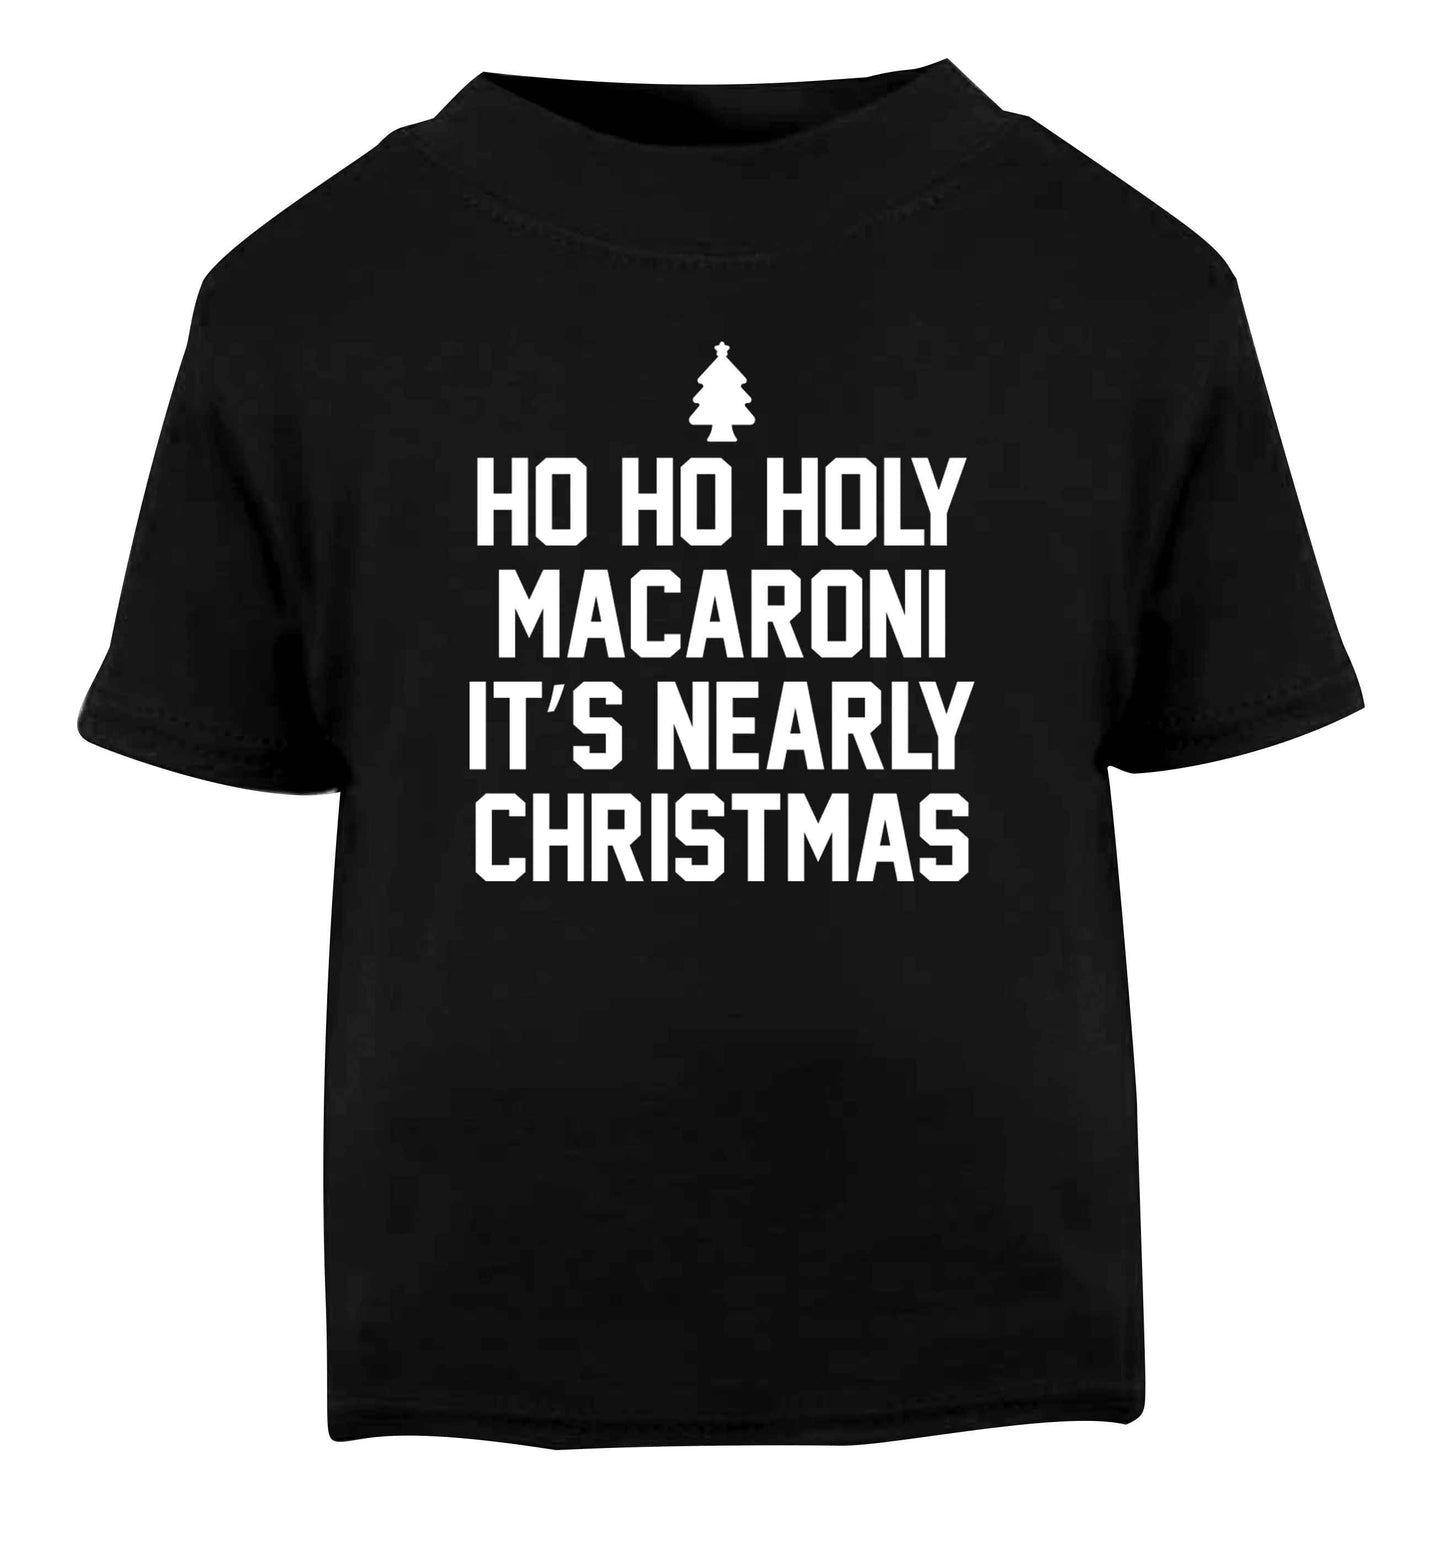 Ho ho holy macaroni it's nearly Christmas Black Baby Toddler Tshirt 2 years